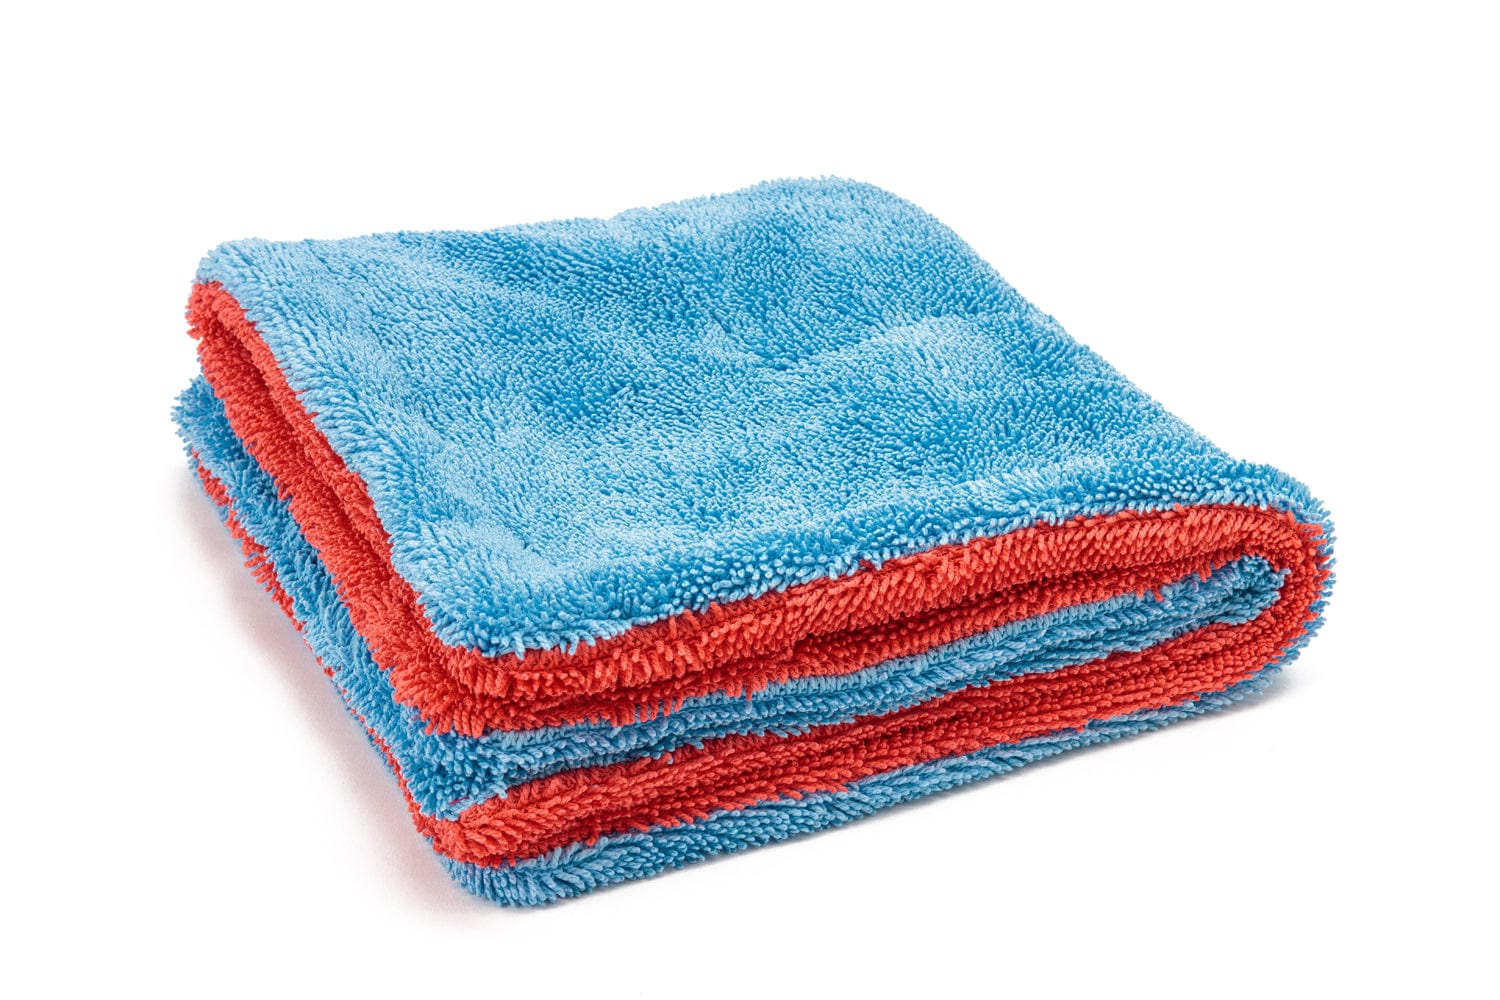 Autofiber Bulk Towel Blue/Red FULL CASE Dreadnought MAX Jr. - Triple Layer Microfiber Twist Pile Drying Towel (16 in. x 16 in., 1400gsm) - 60 Case